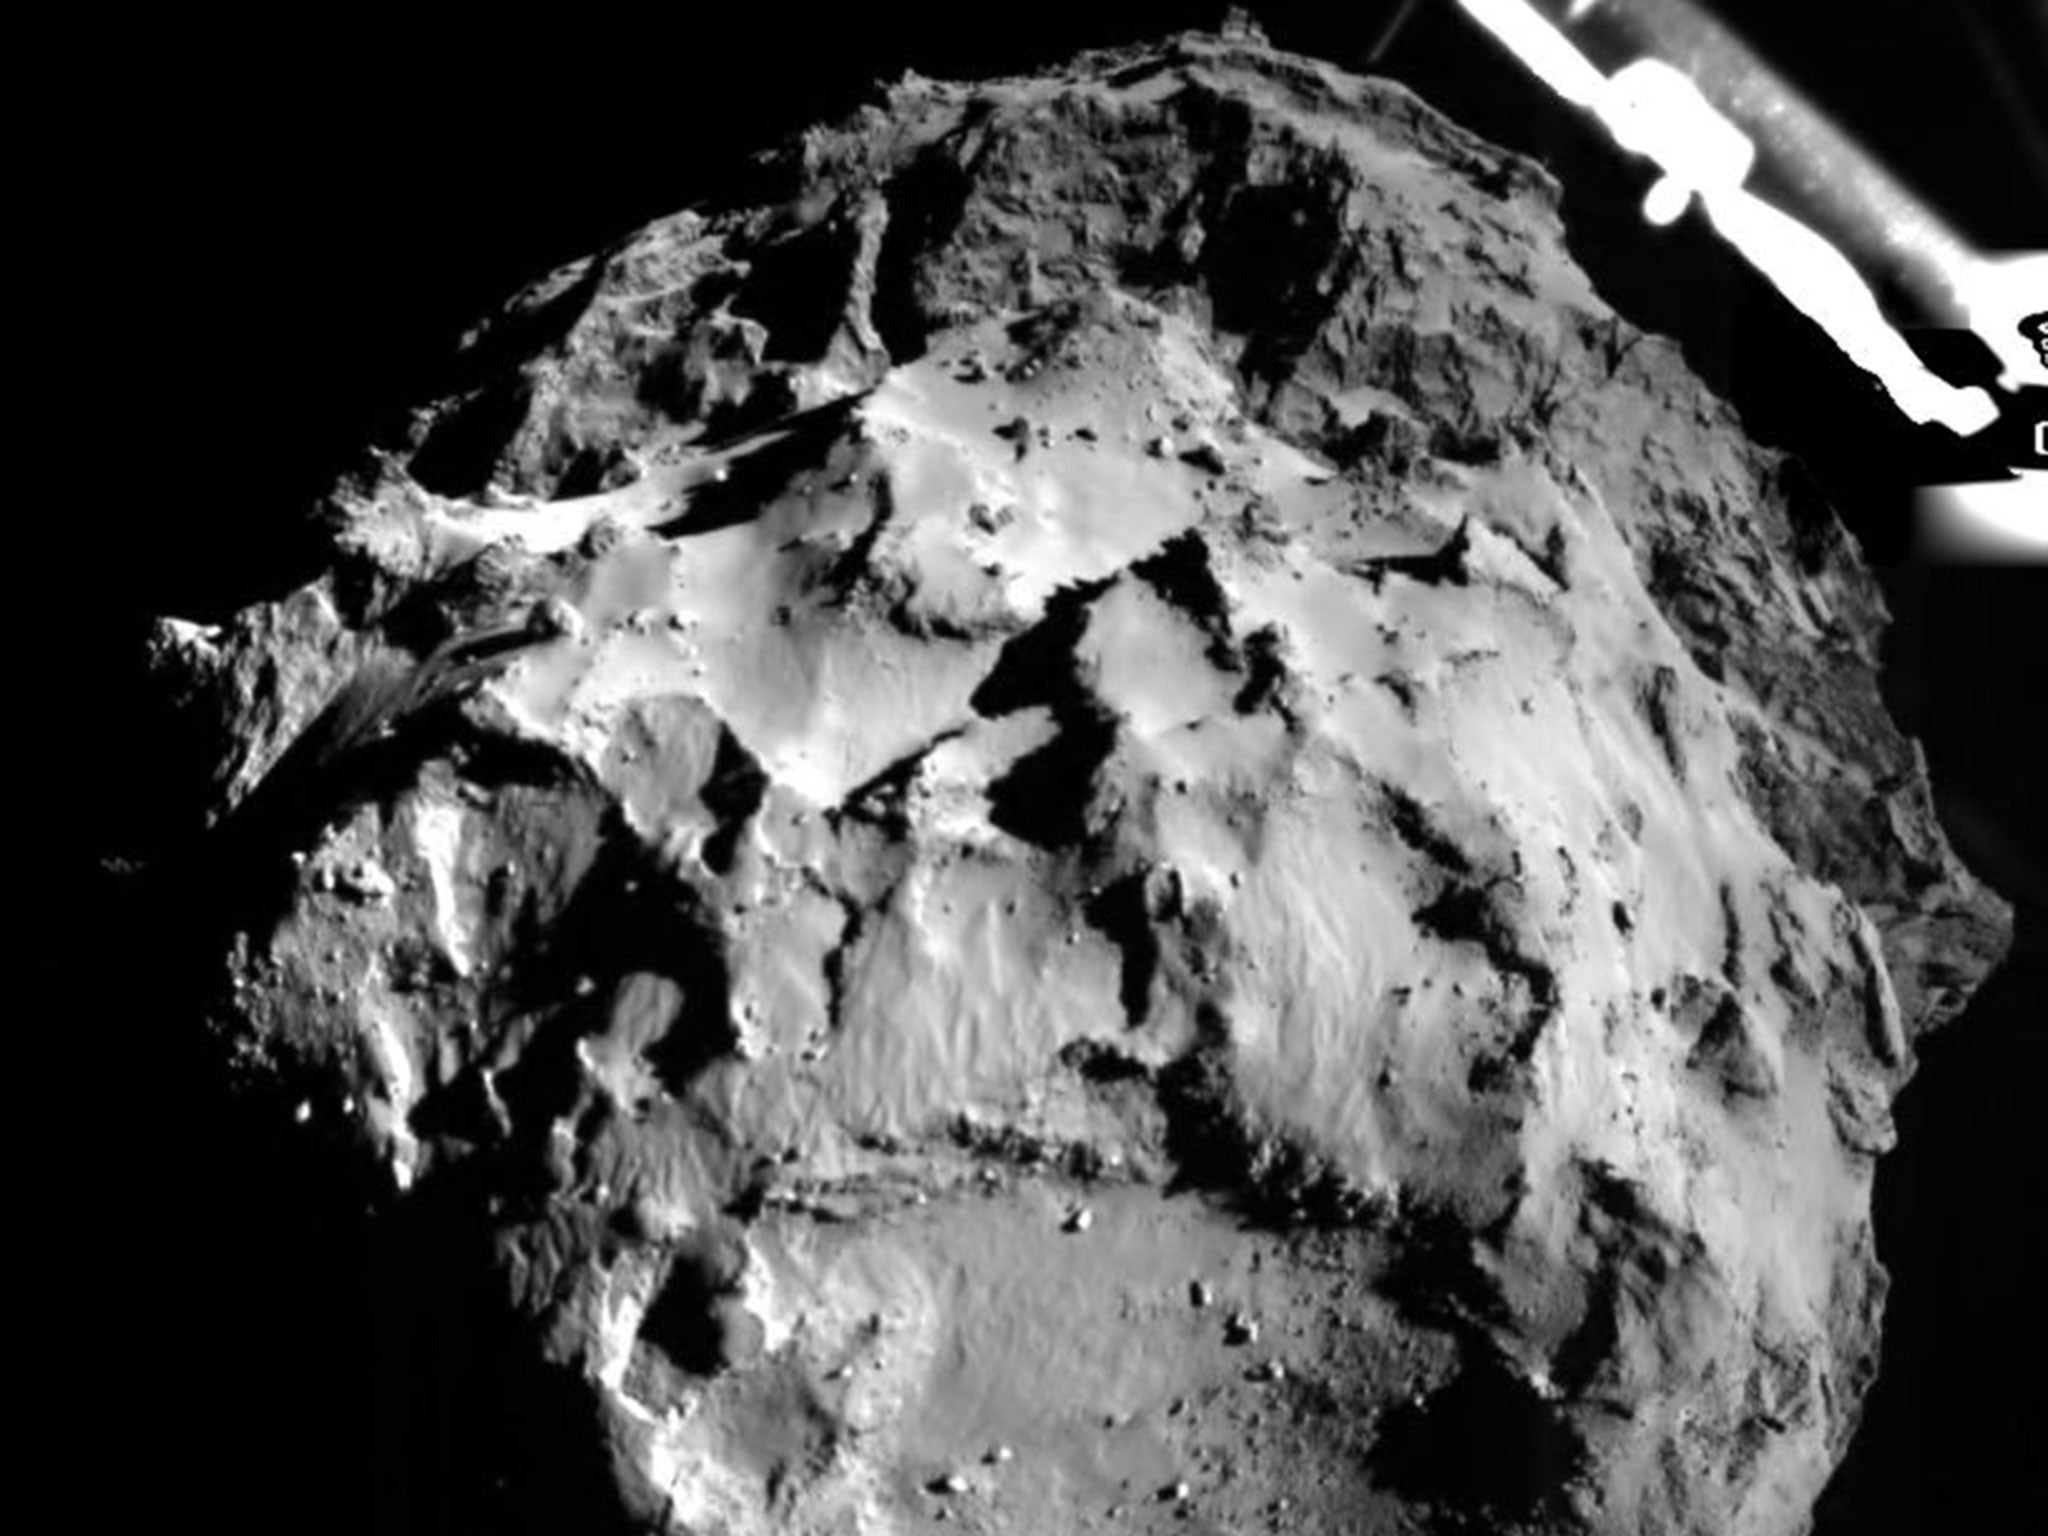 The Rosetta Lander Imaging System on the Philae Lander shows the comet 67P/Churyumov-Gerasimenko